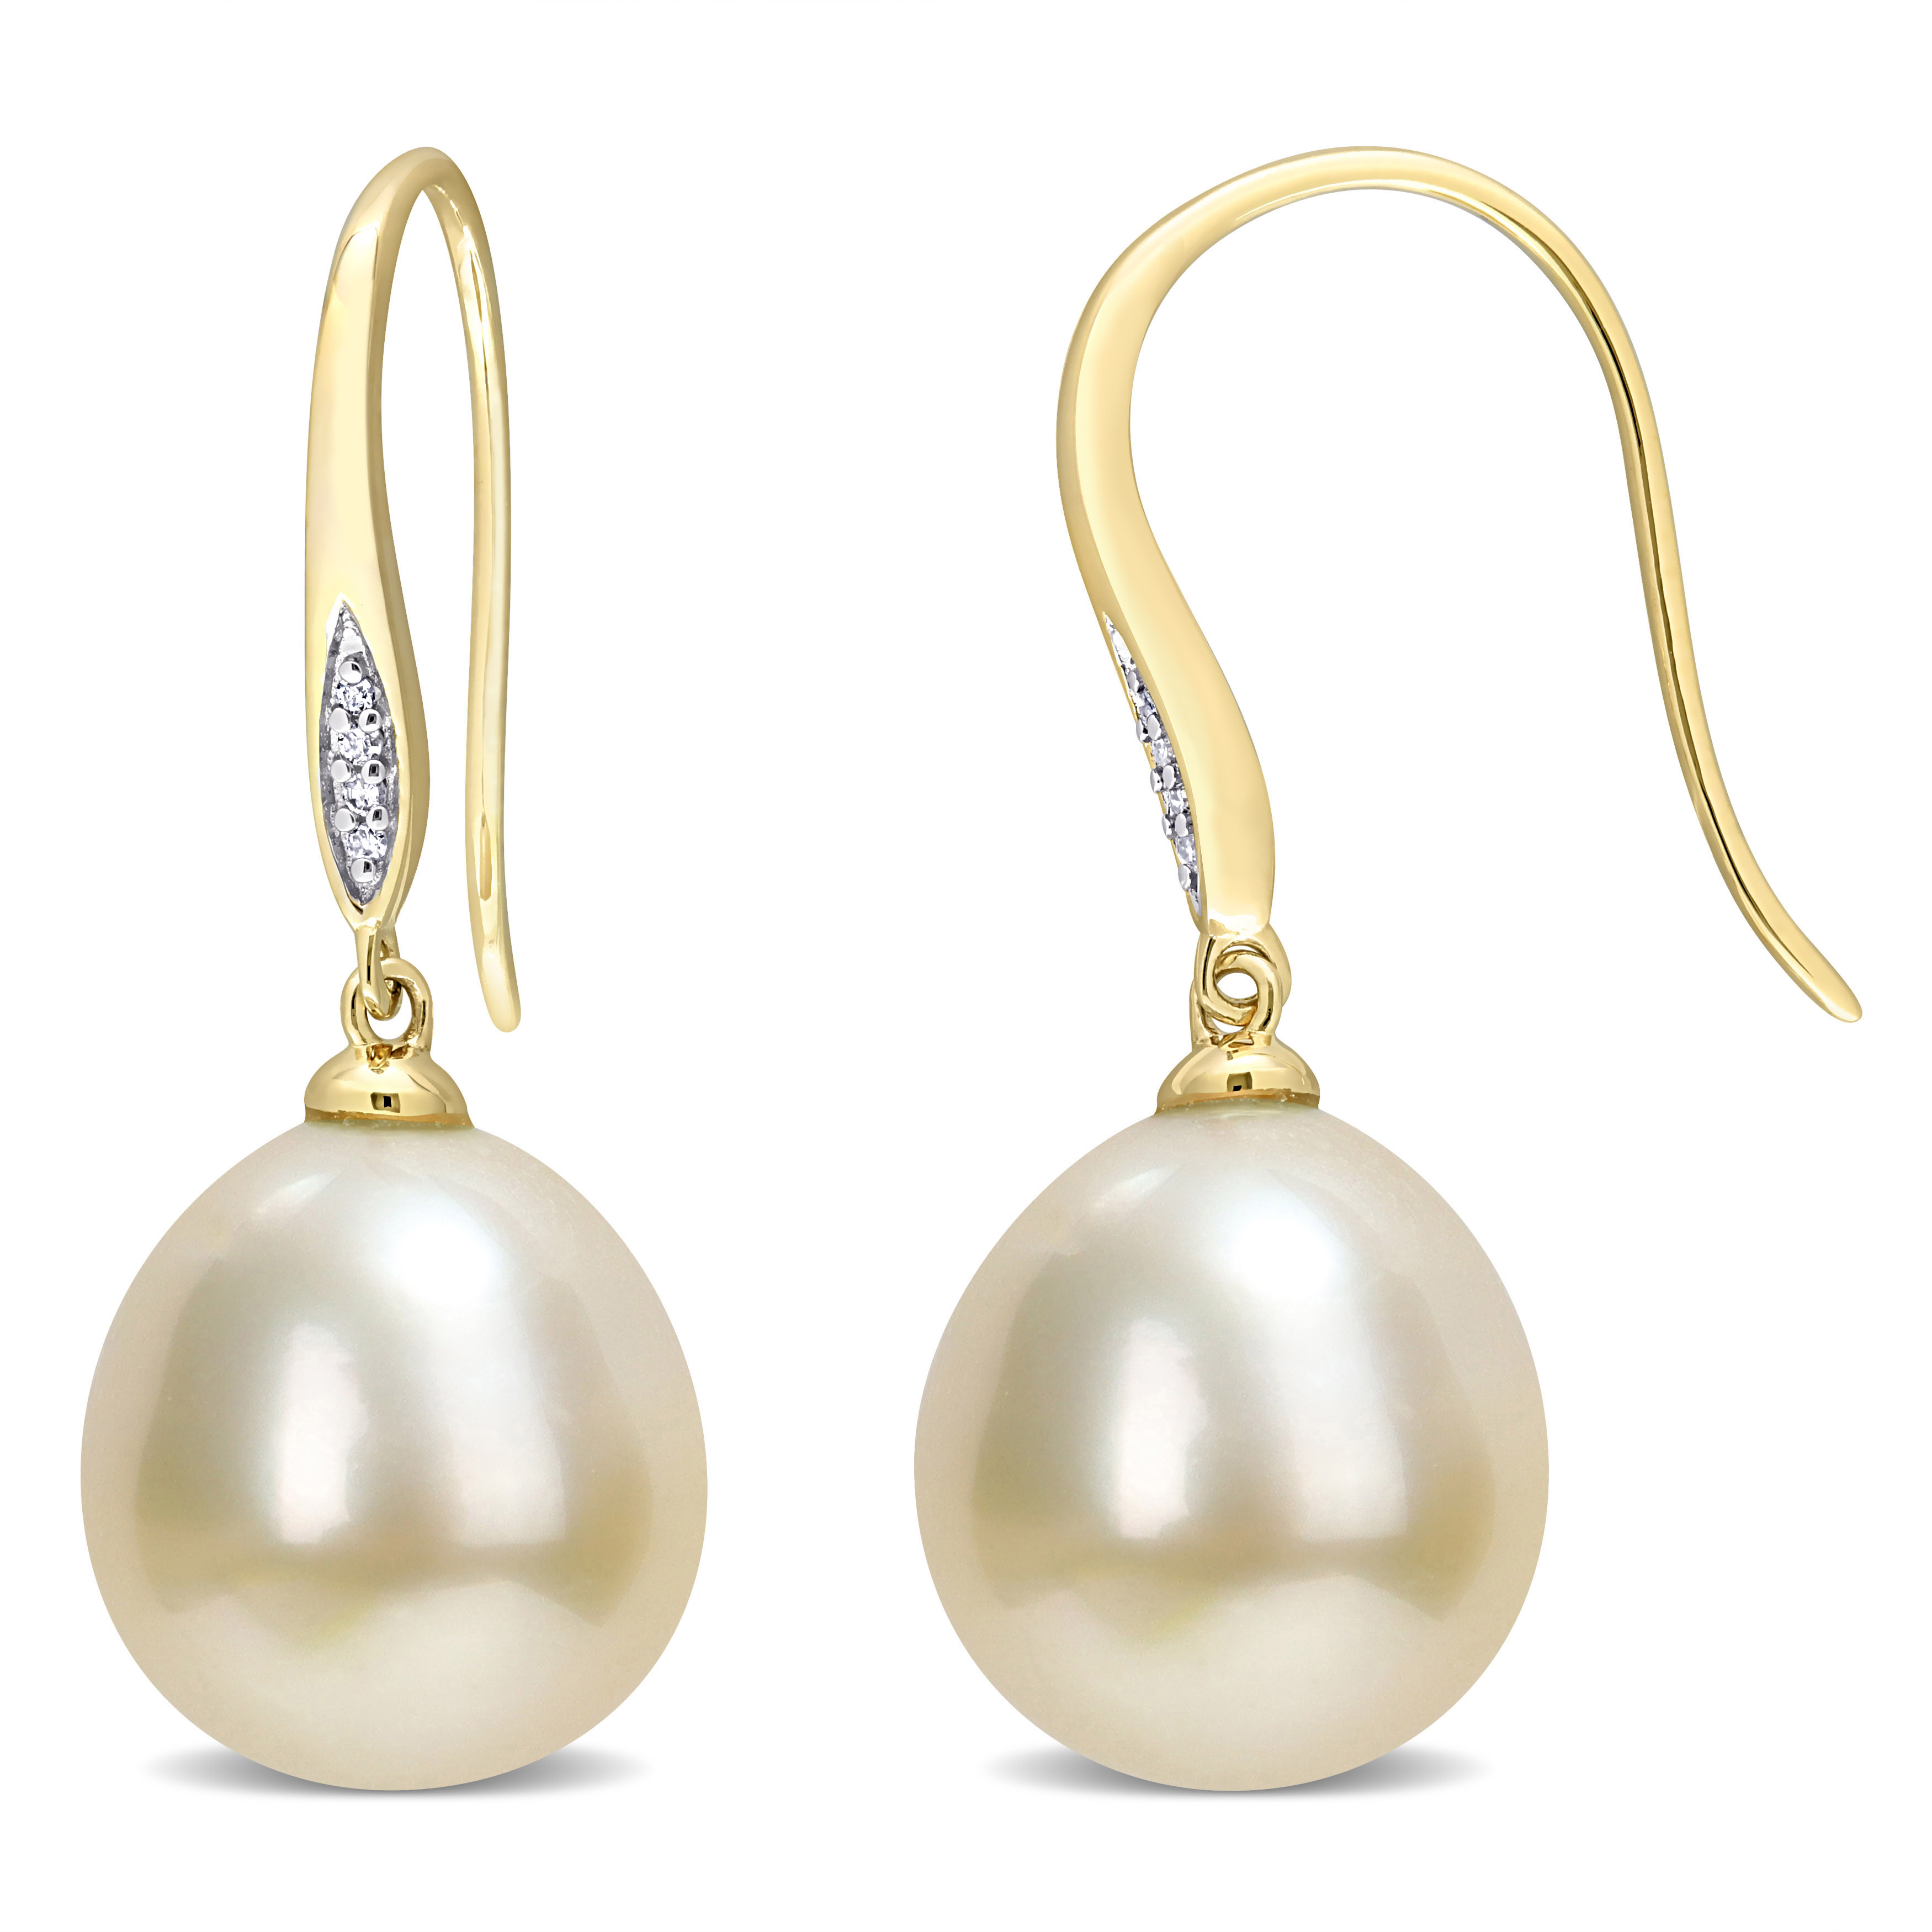 12-12.5 MM Golden South Sea Cultured Pearl & Diamond Accent Shepherd Hook Earrings in 10k Yellow Gold